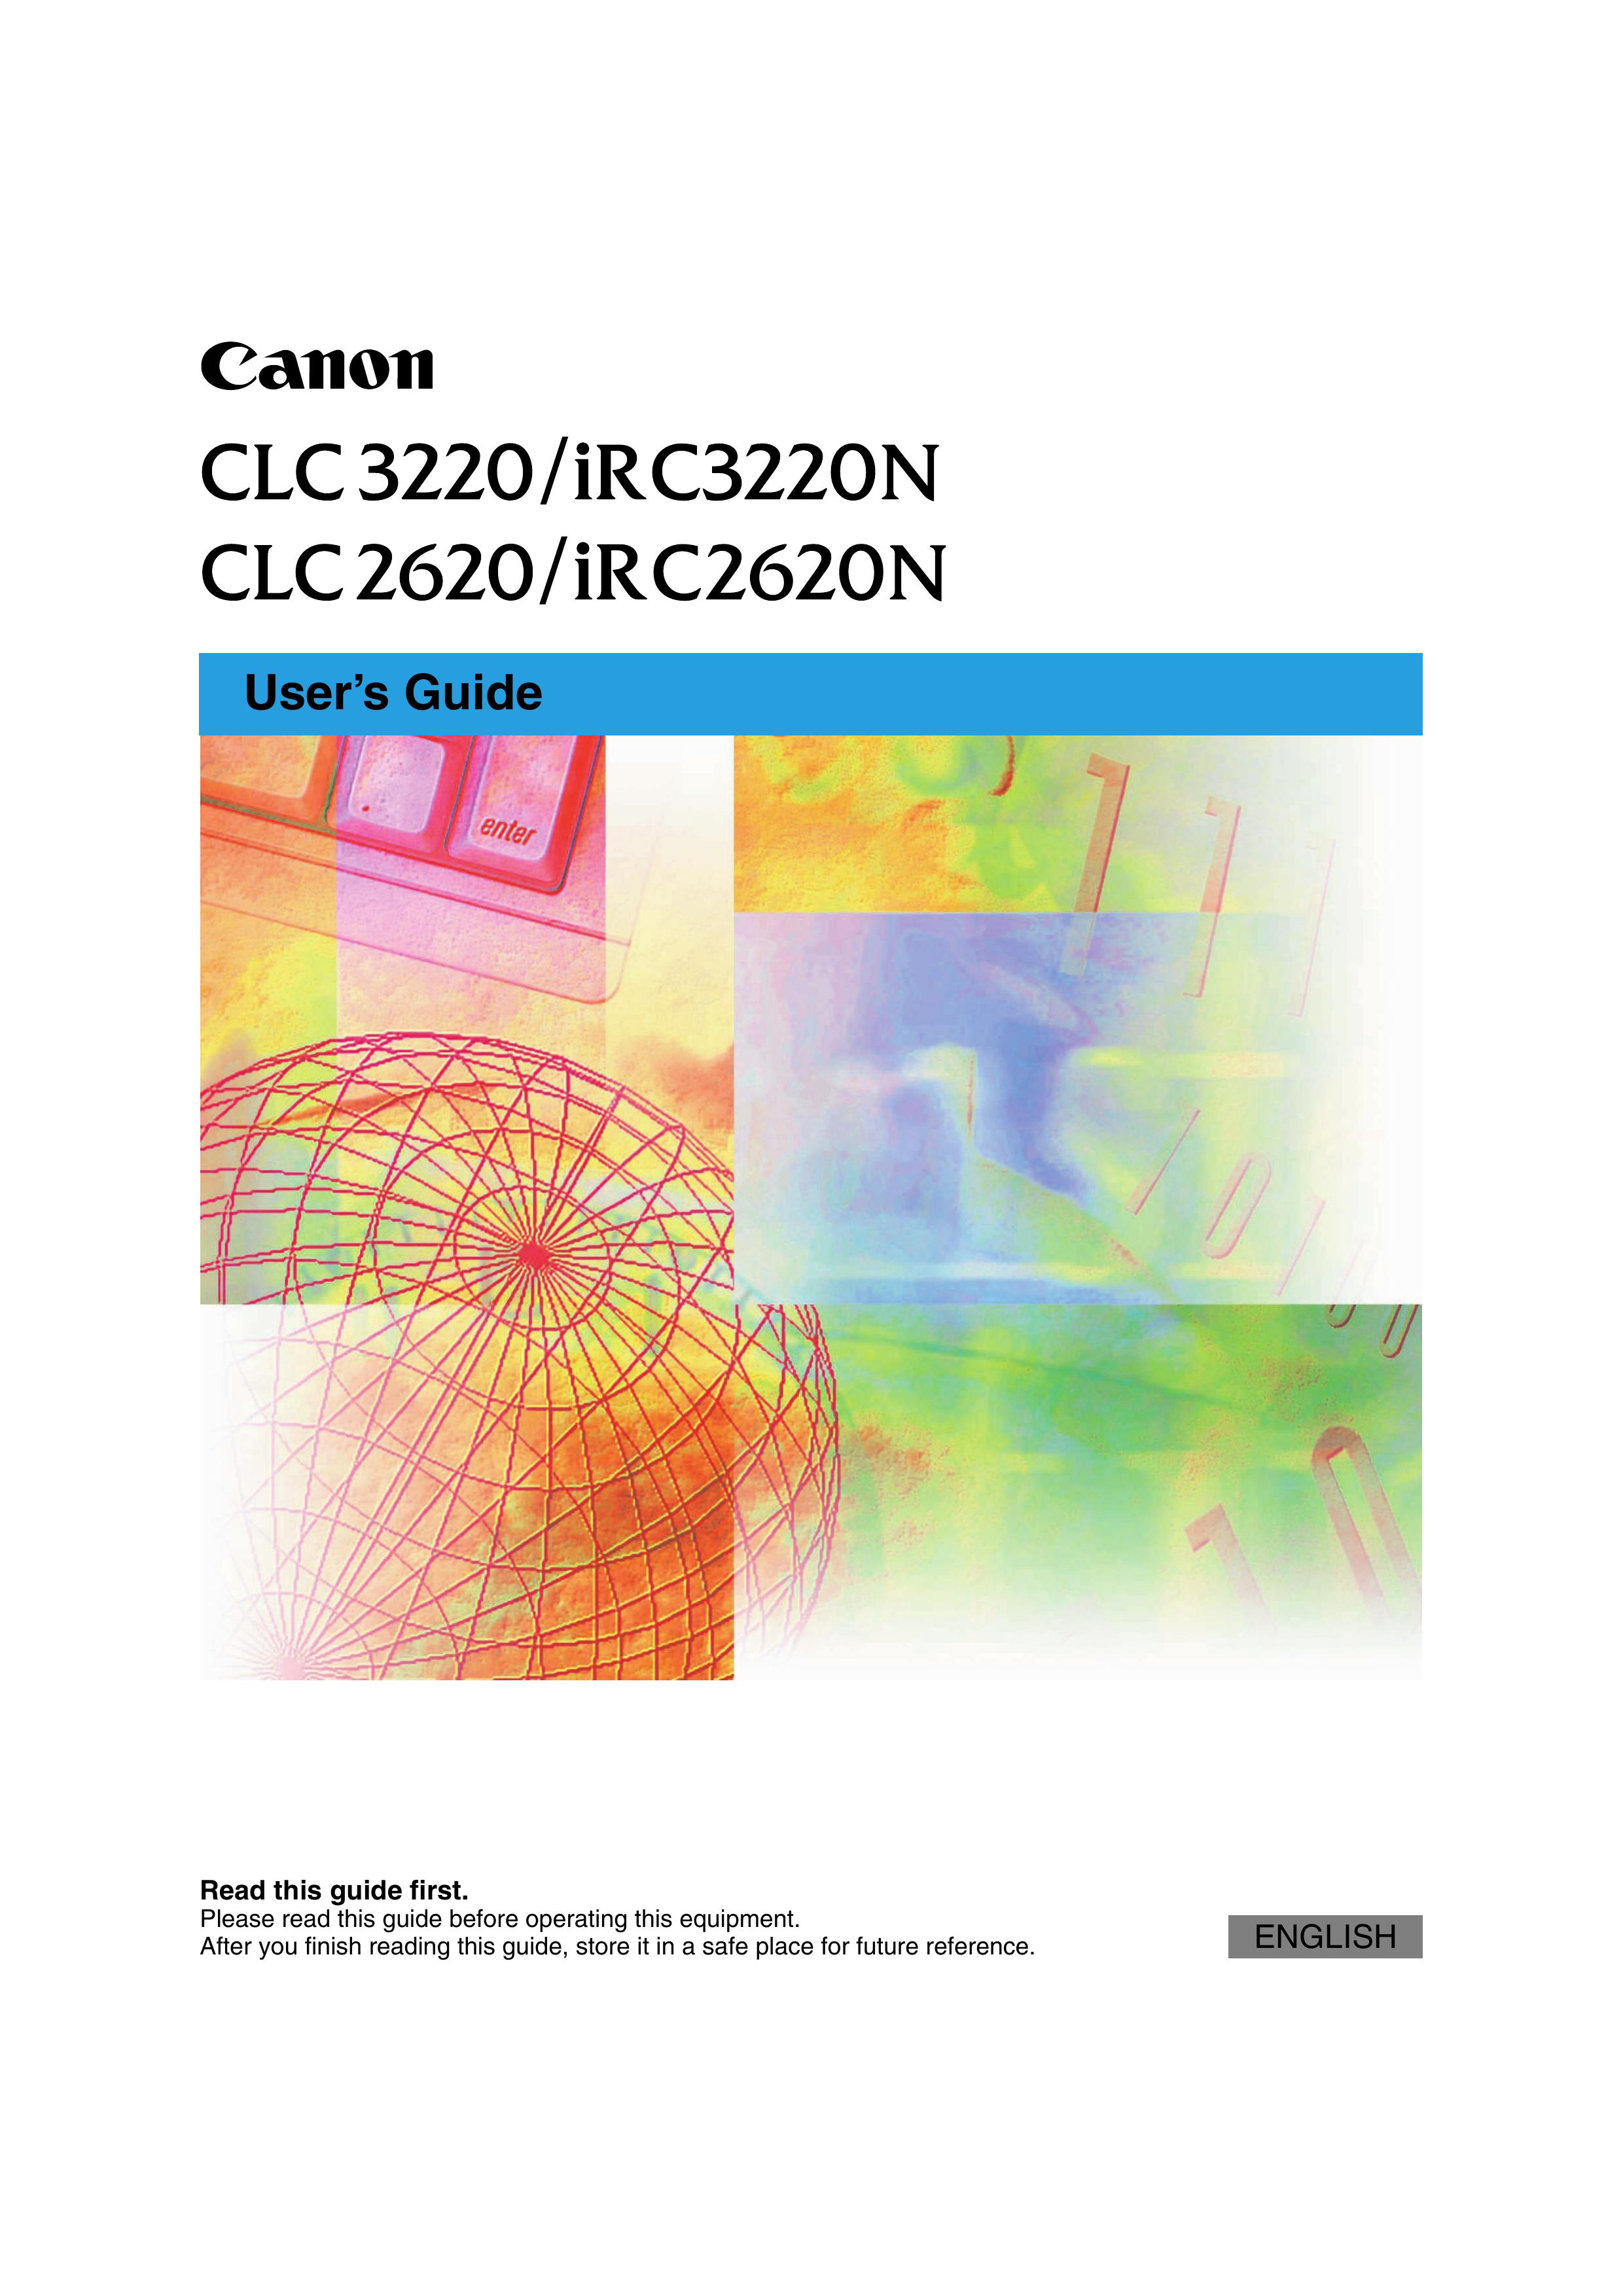 Canon CLC3220 Photo Printer User Manual